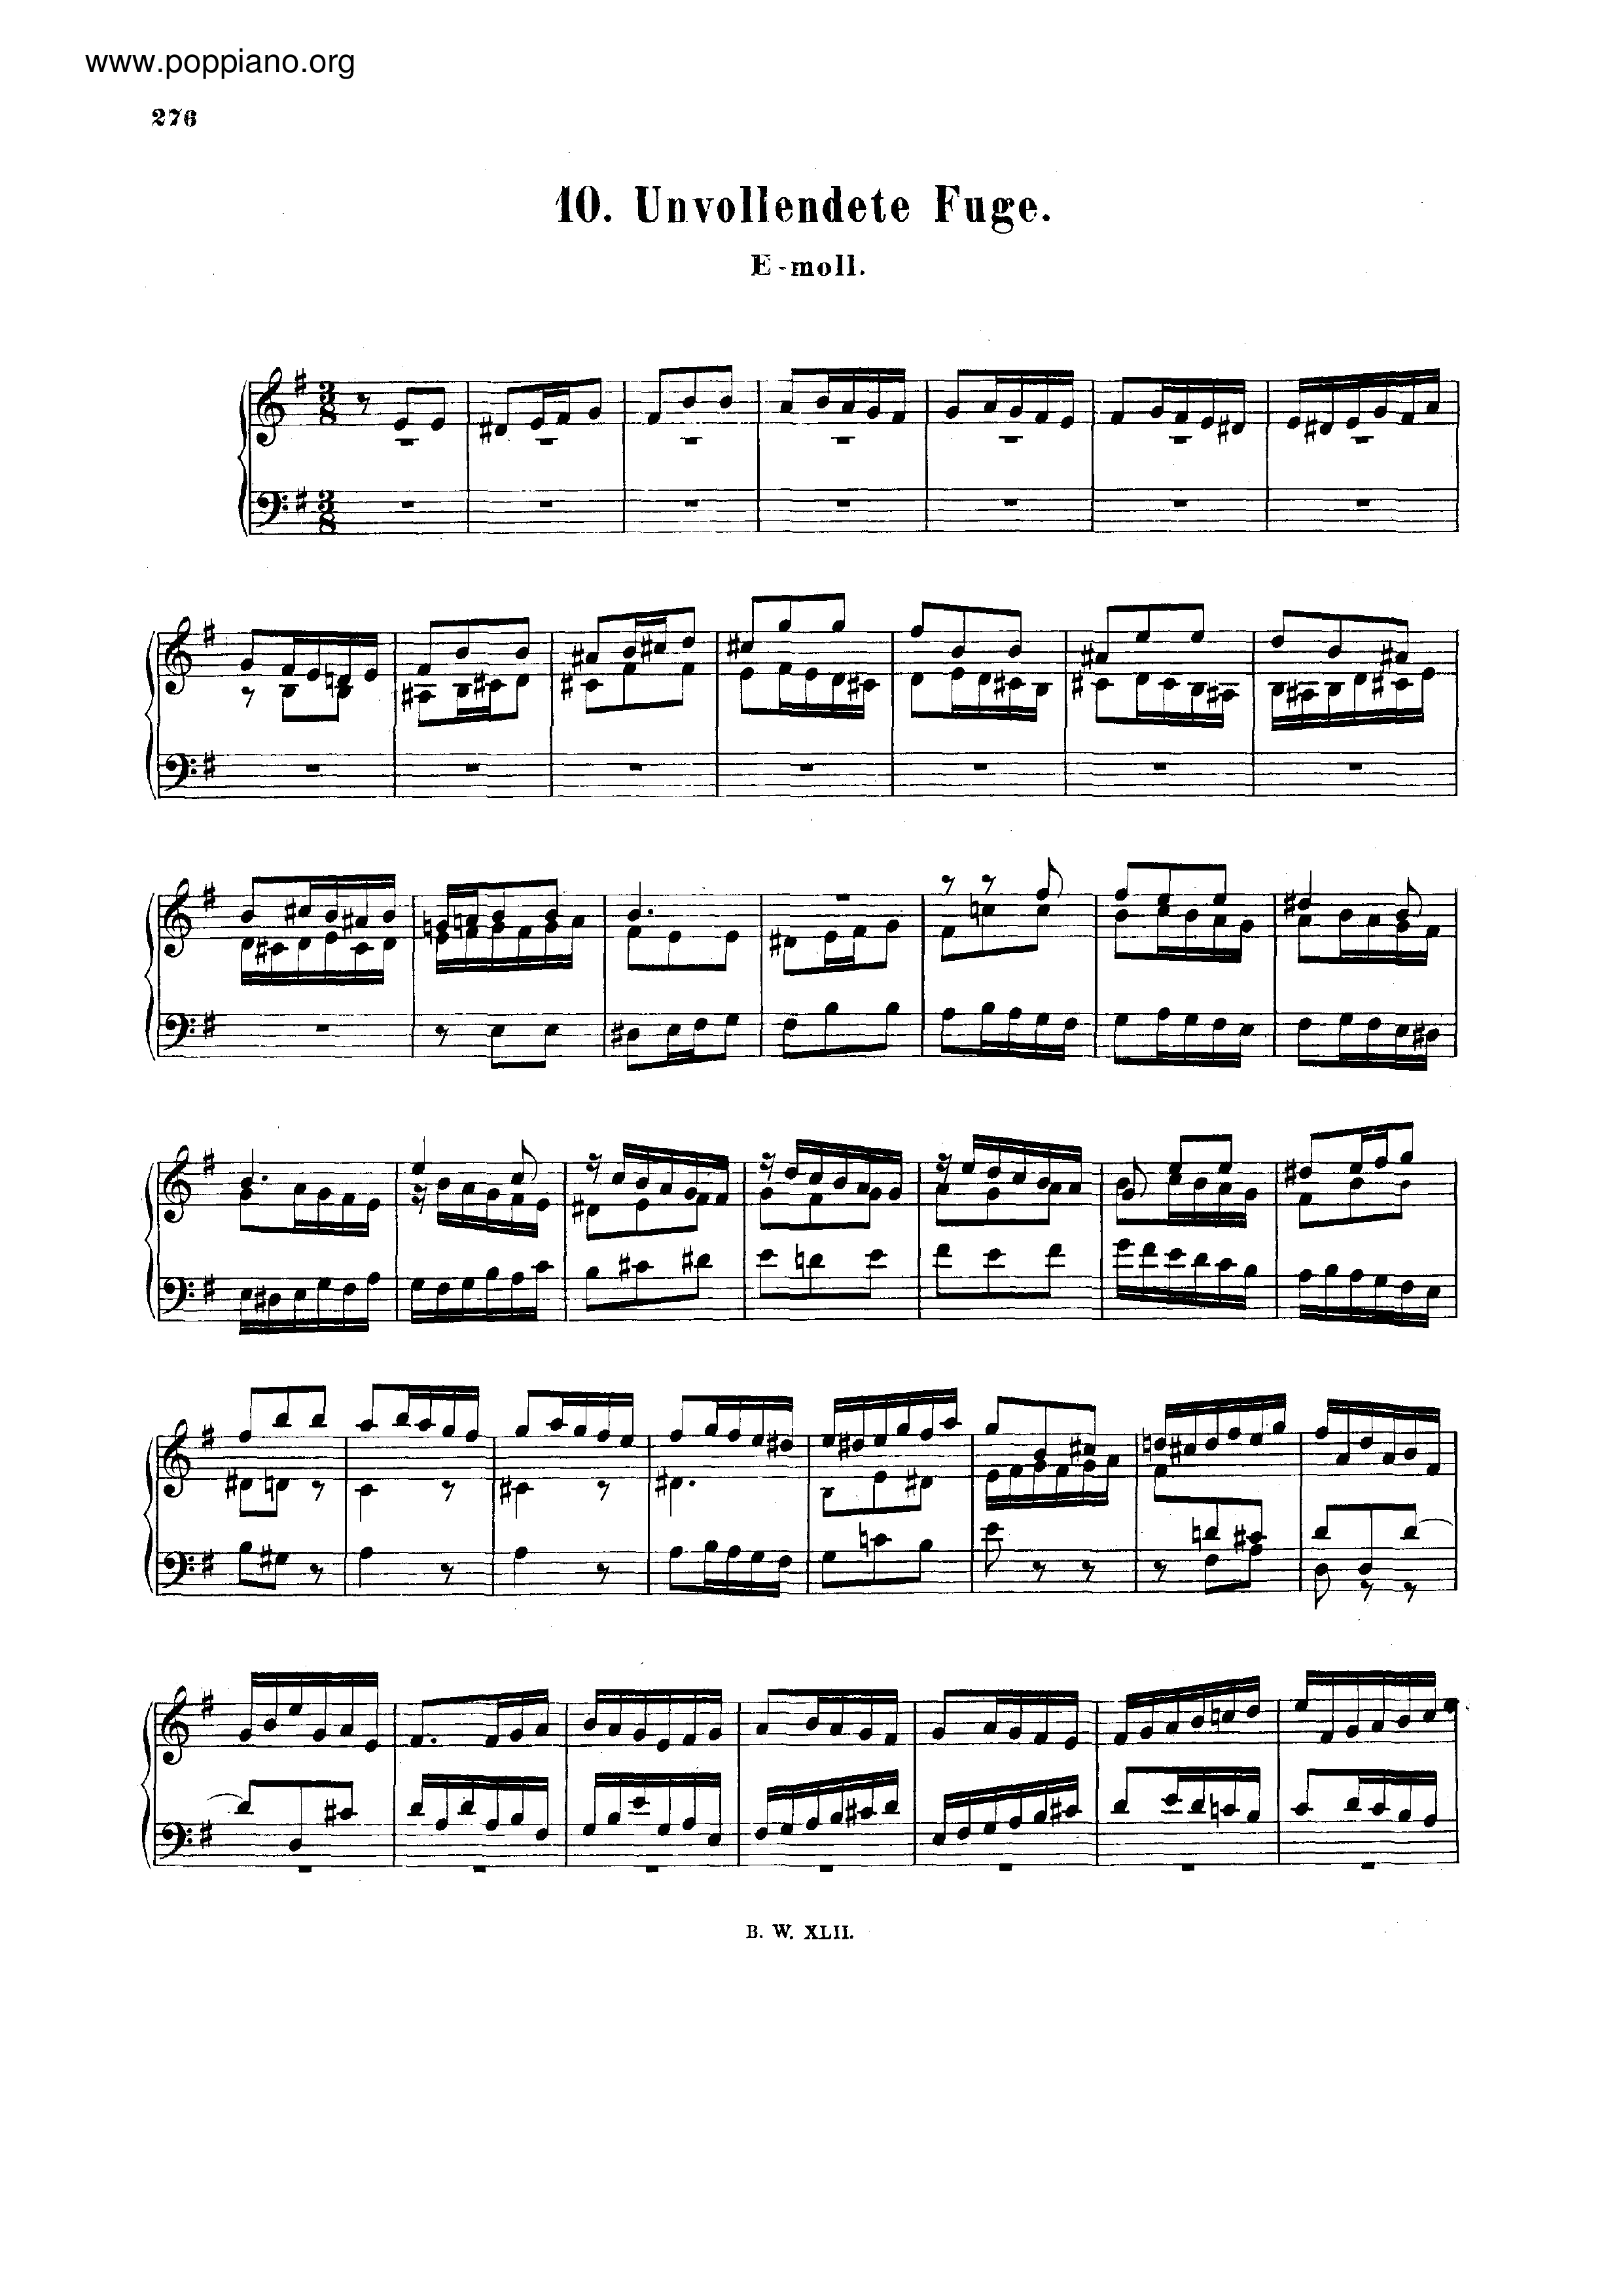 Fugue in e minor, BWV 960 (unfinished)琴譜